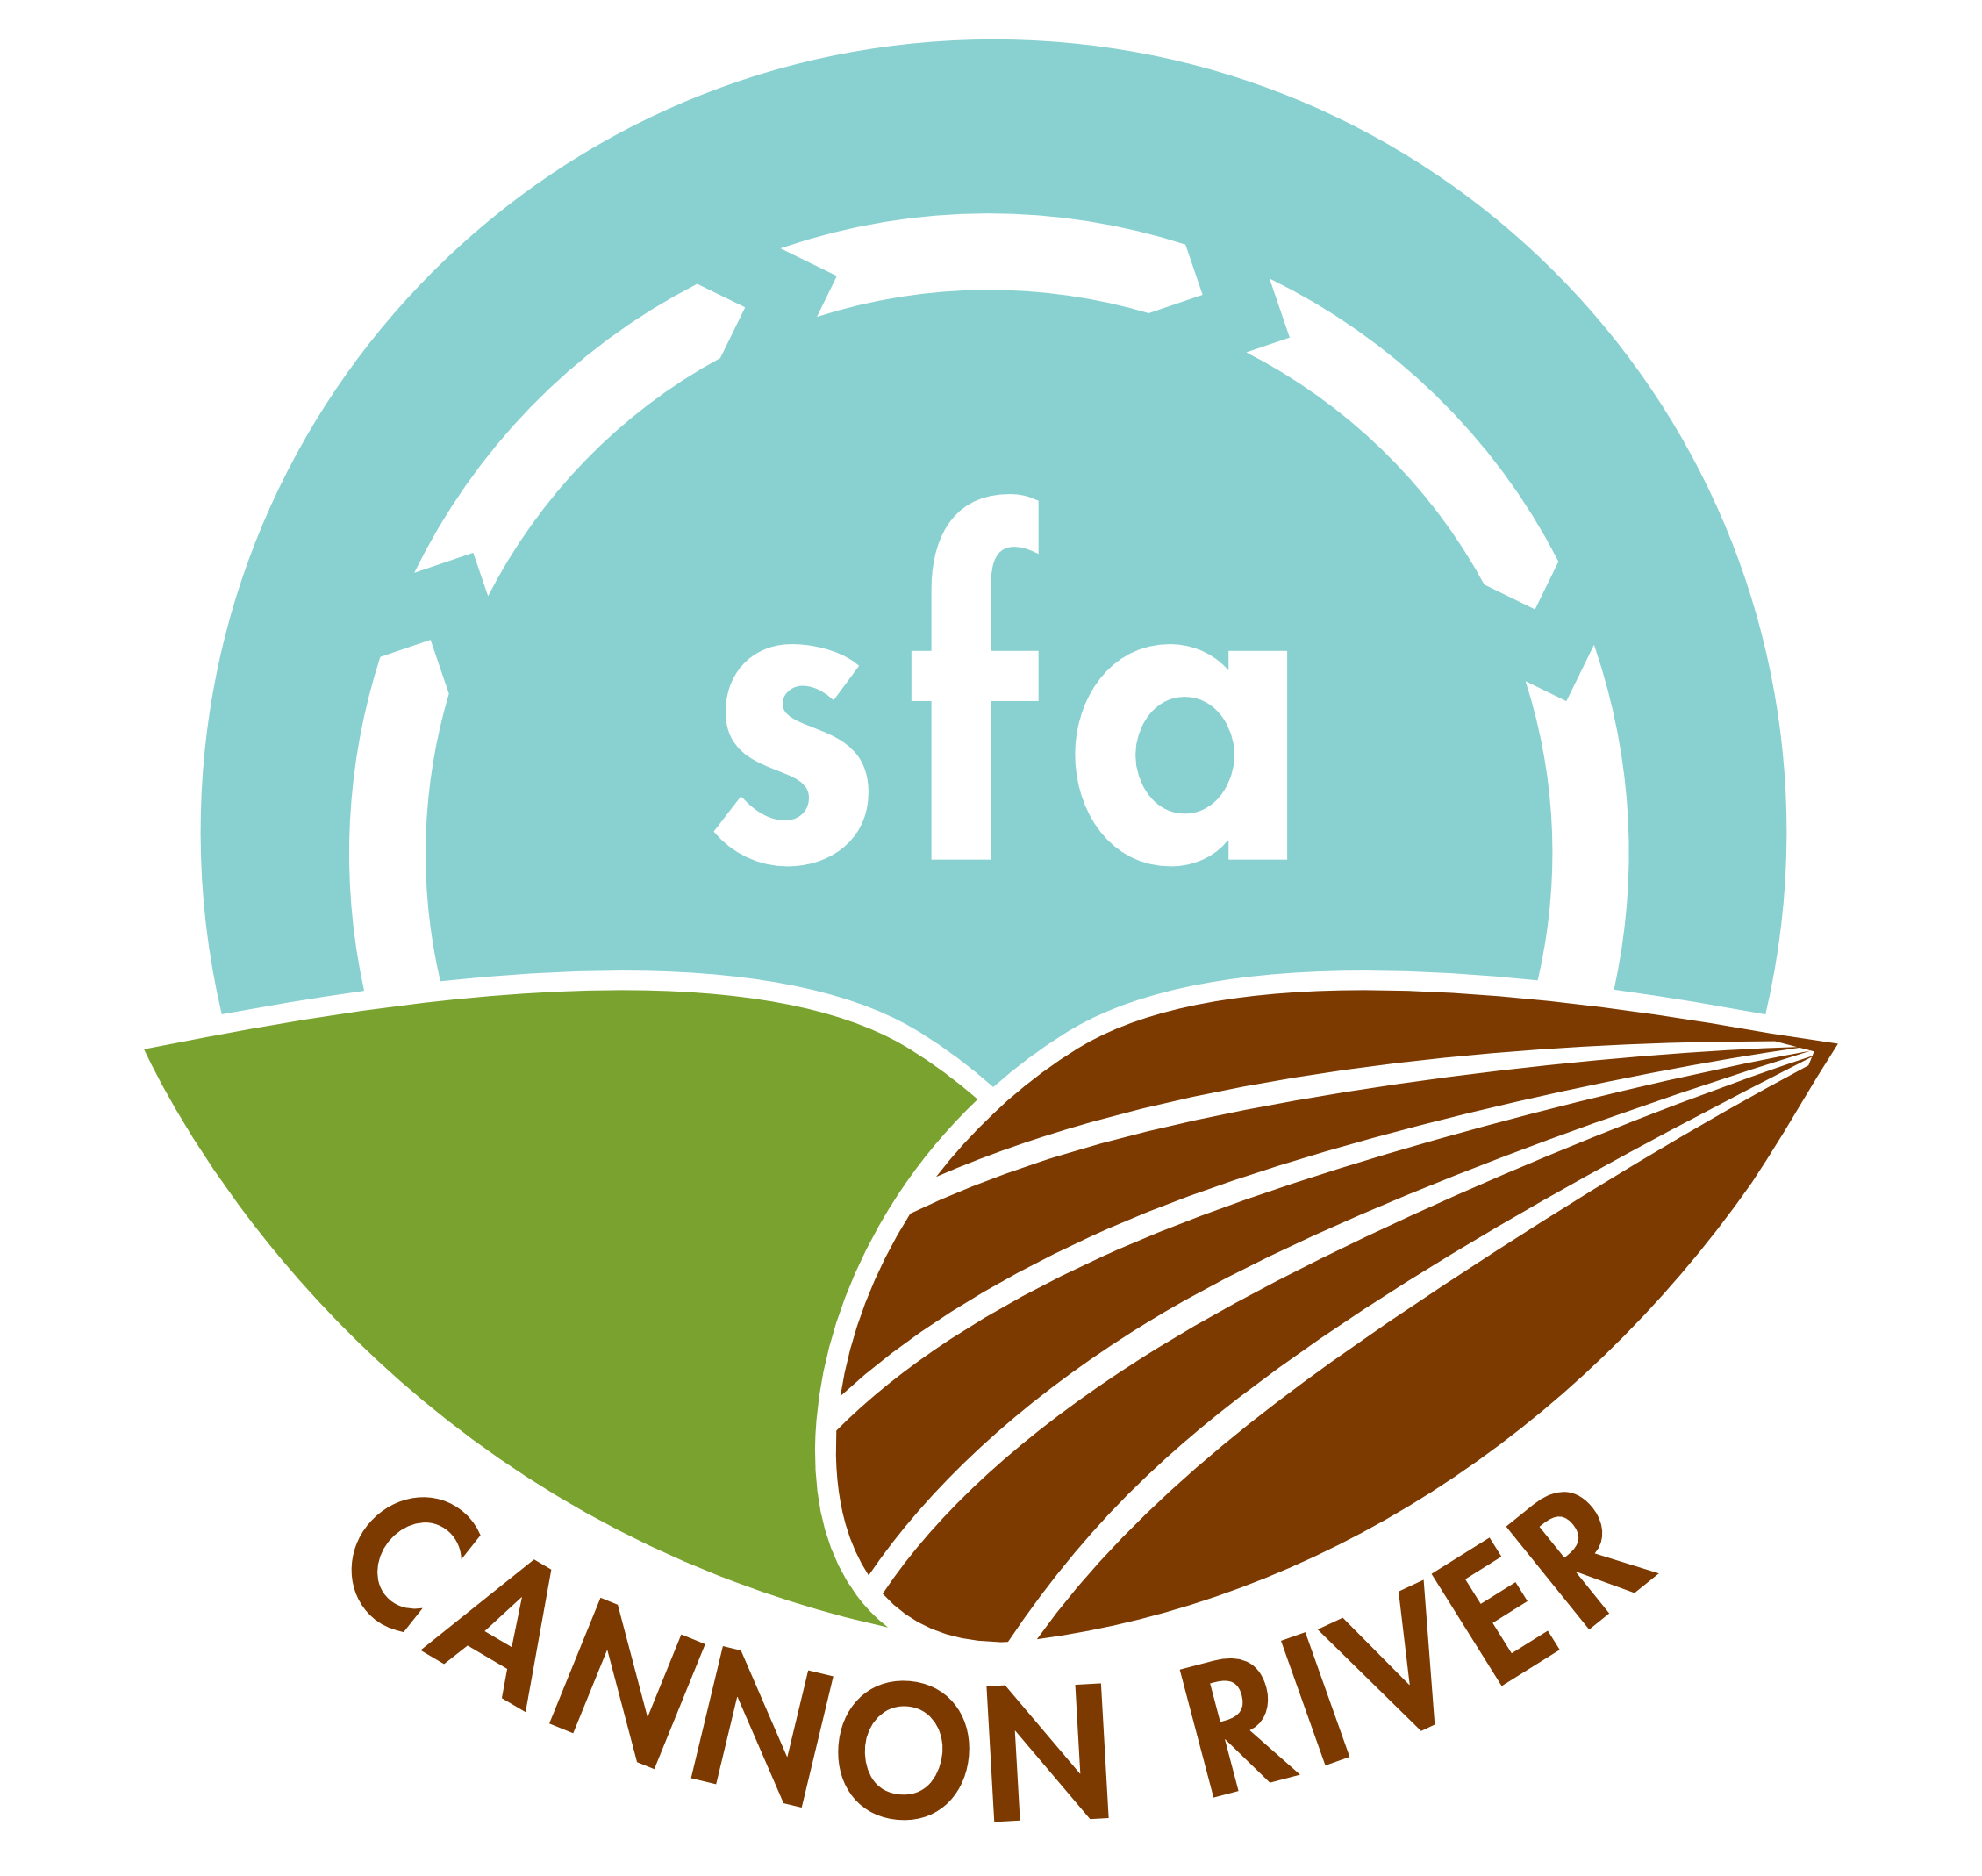 Cannon_River_RGB